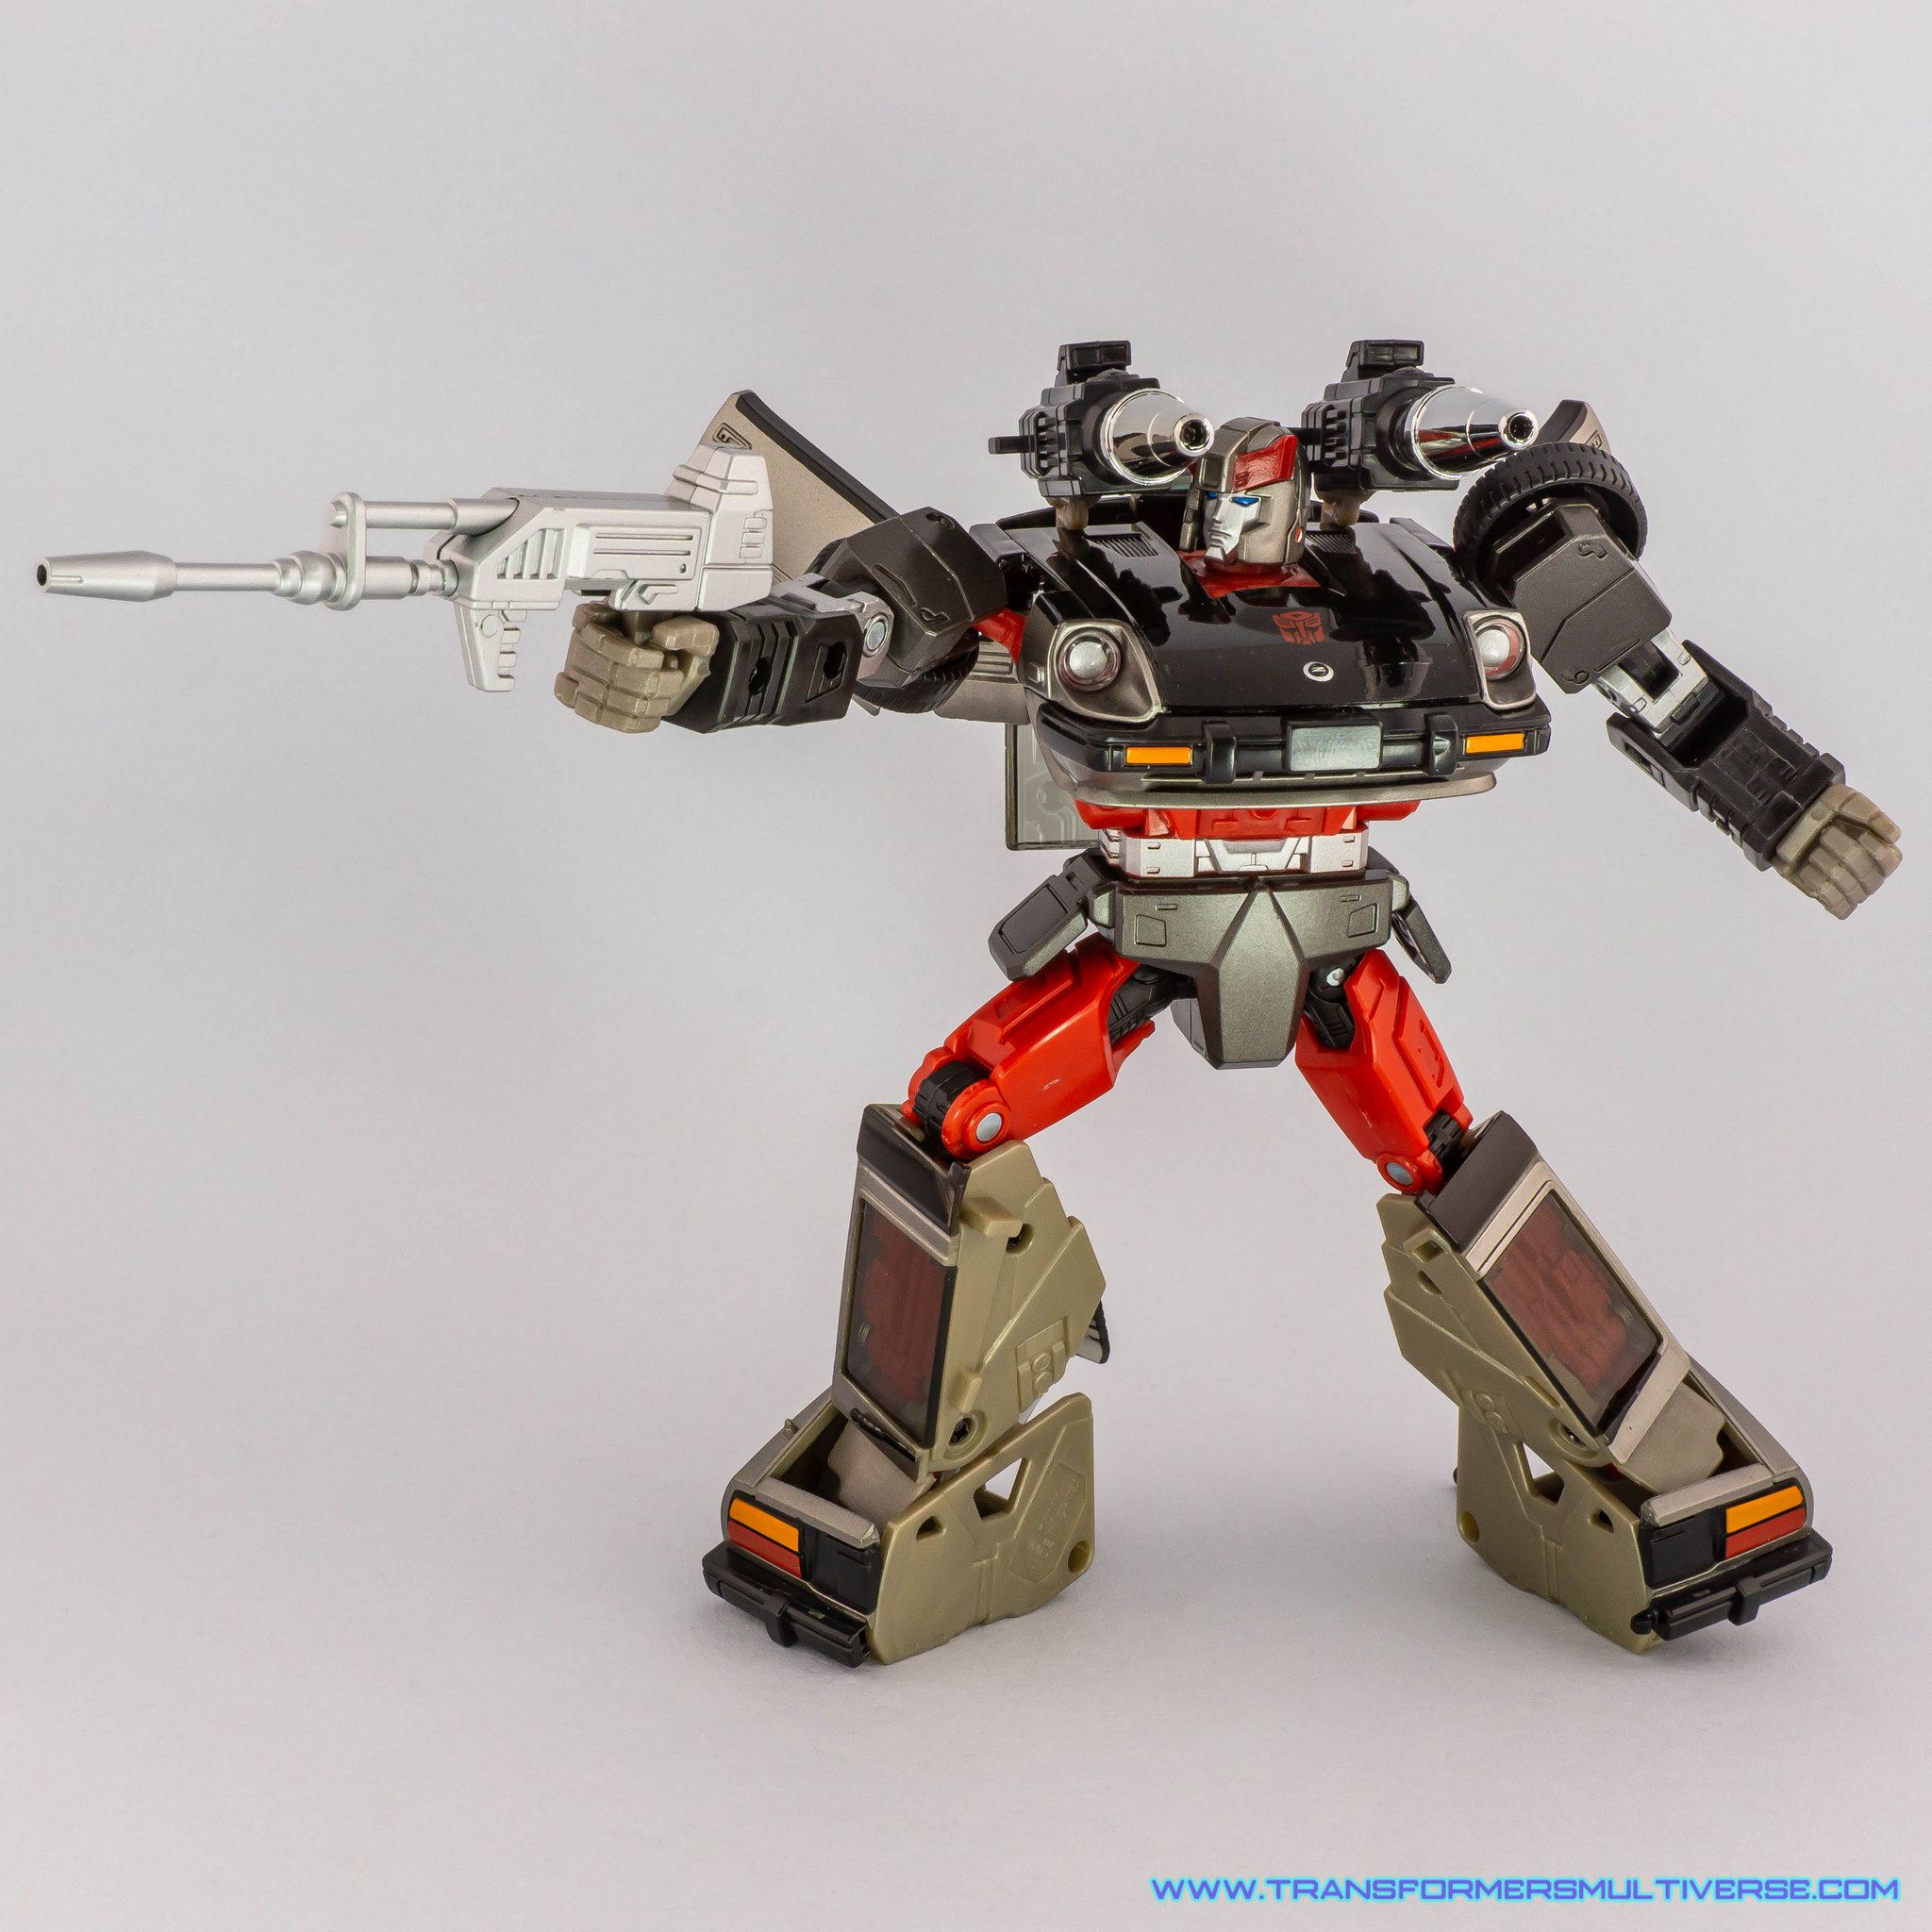 Transformers Masterpiece Bluestreak with rifle alternate pose